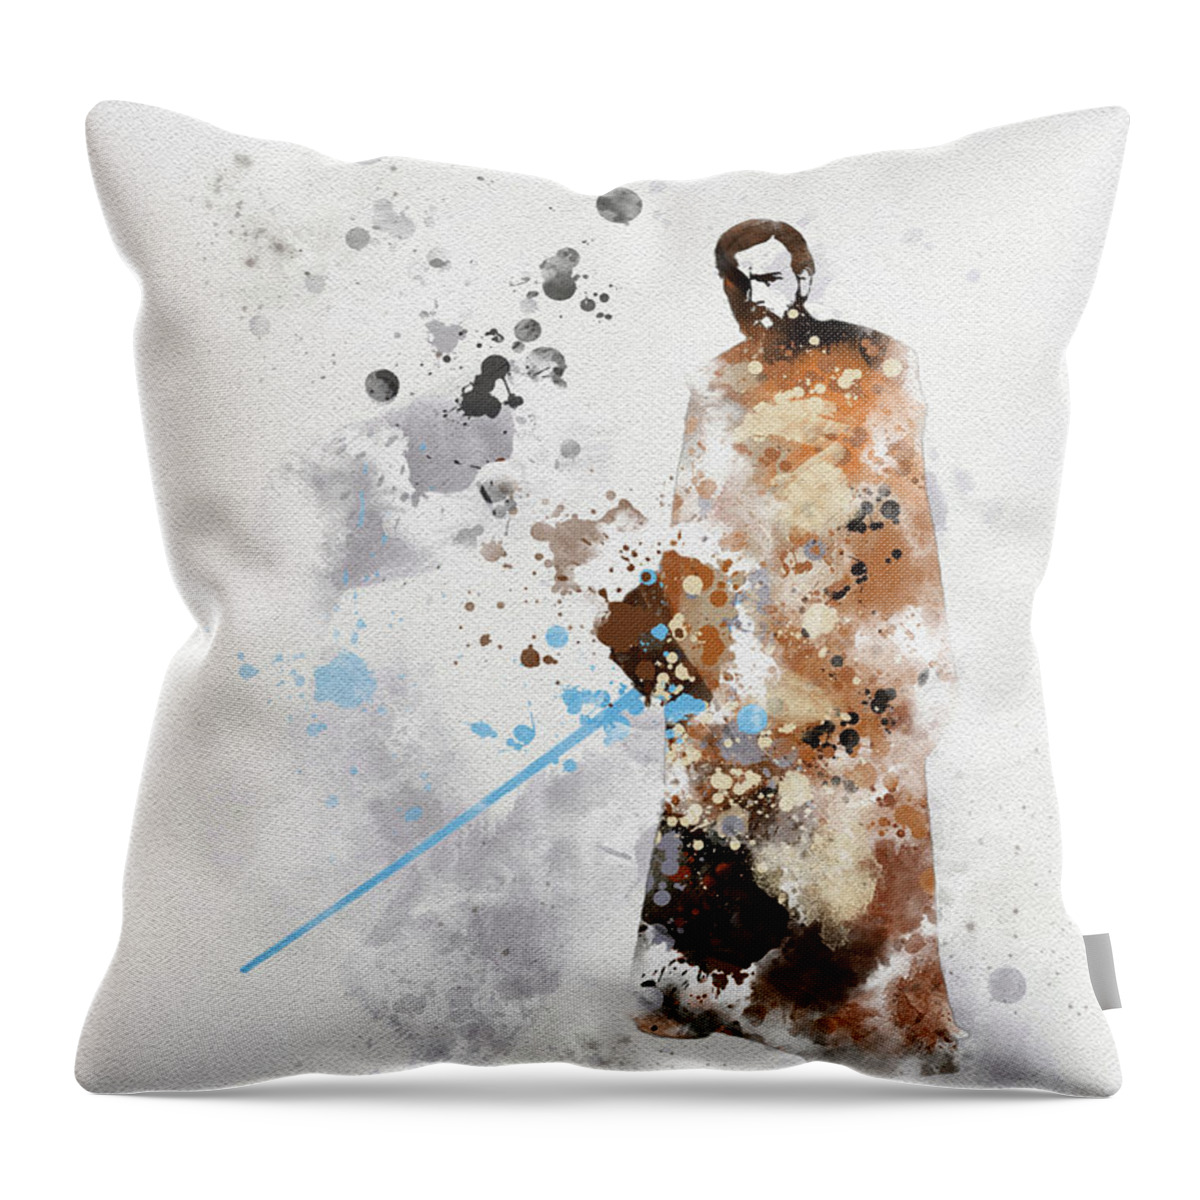 Obi Wan Kenobi Throw Pillow featuring the mixed media Obi-Wan Kenobi by My Inspiration